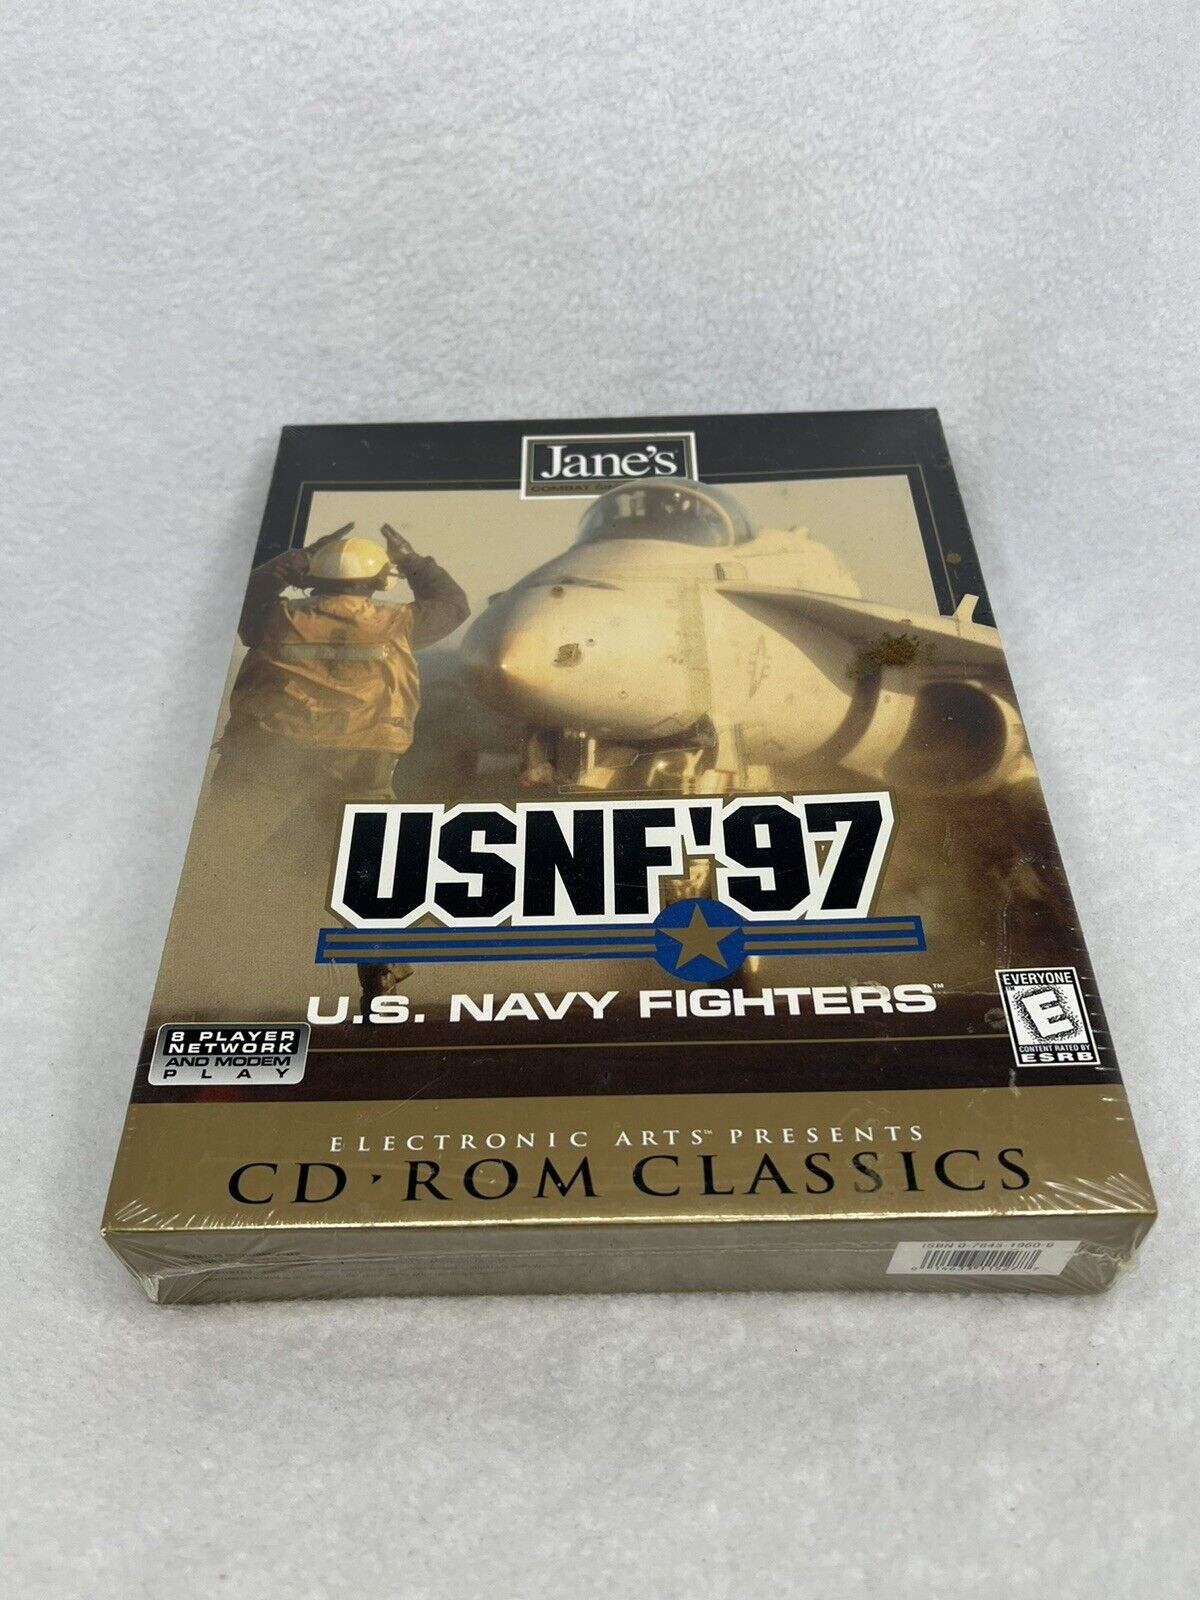 Vintage USNF\'97 U.S. Navy Fighters PC CD-ROM Sealed Original Box EA 1999 Catalog